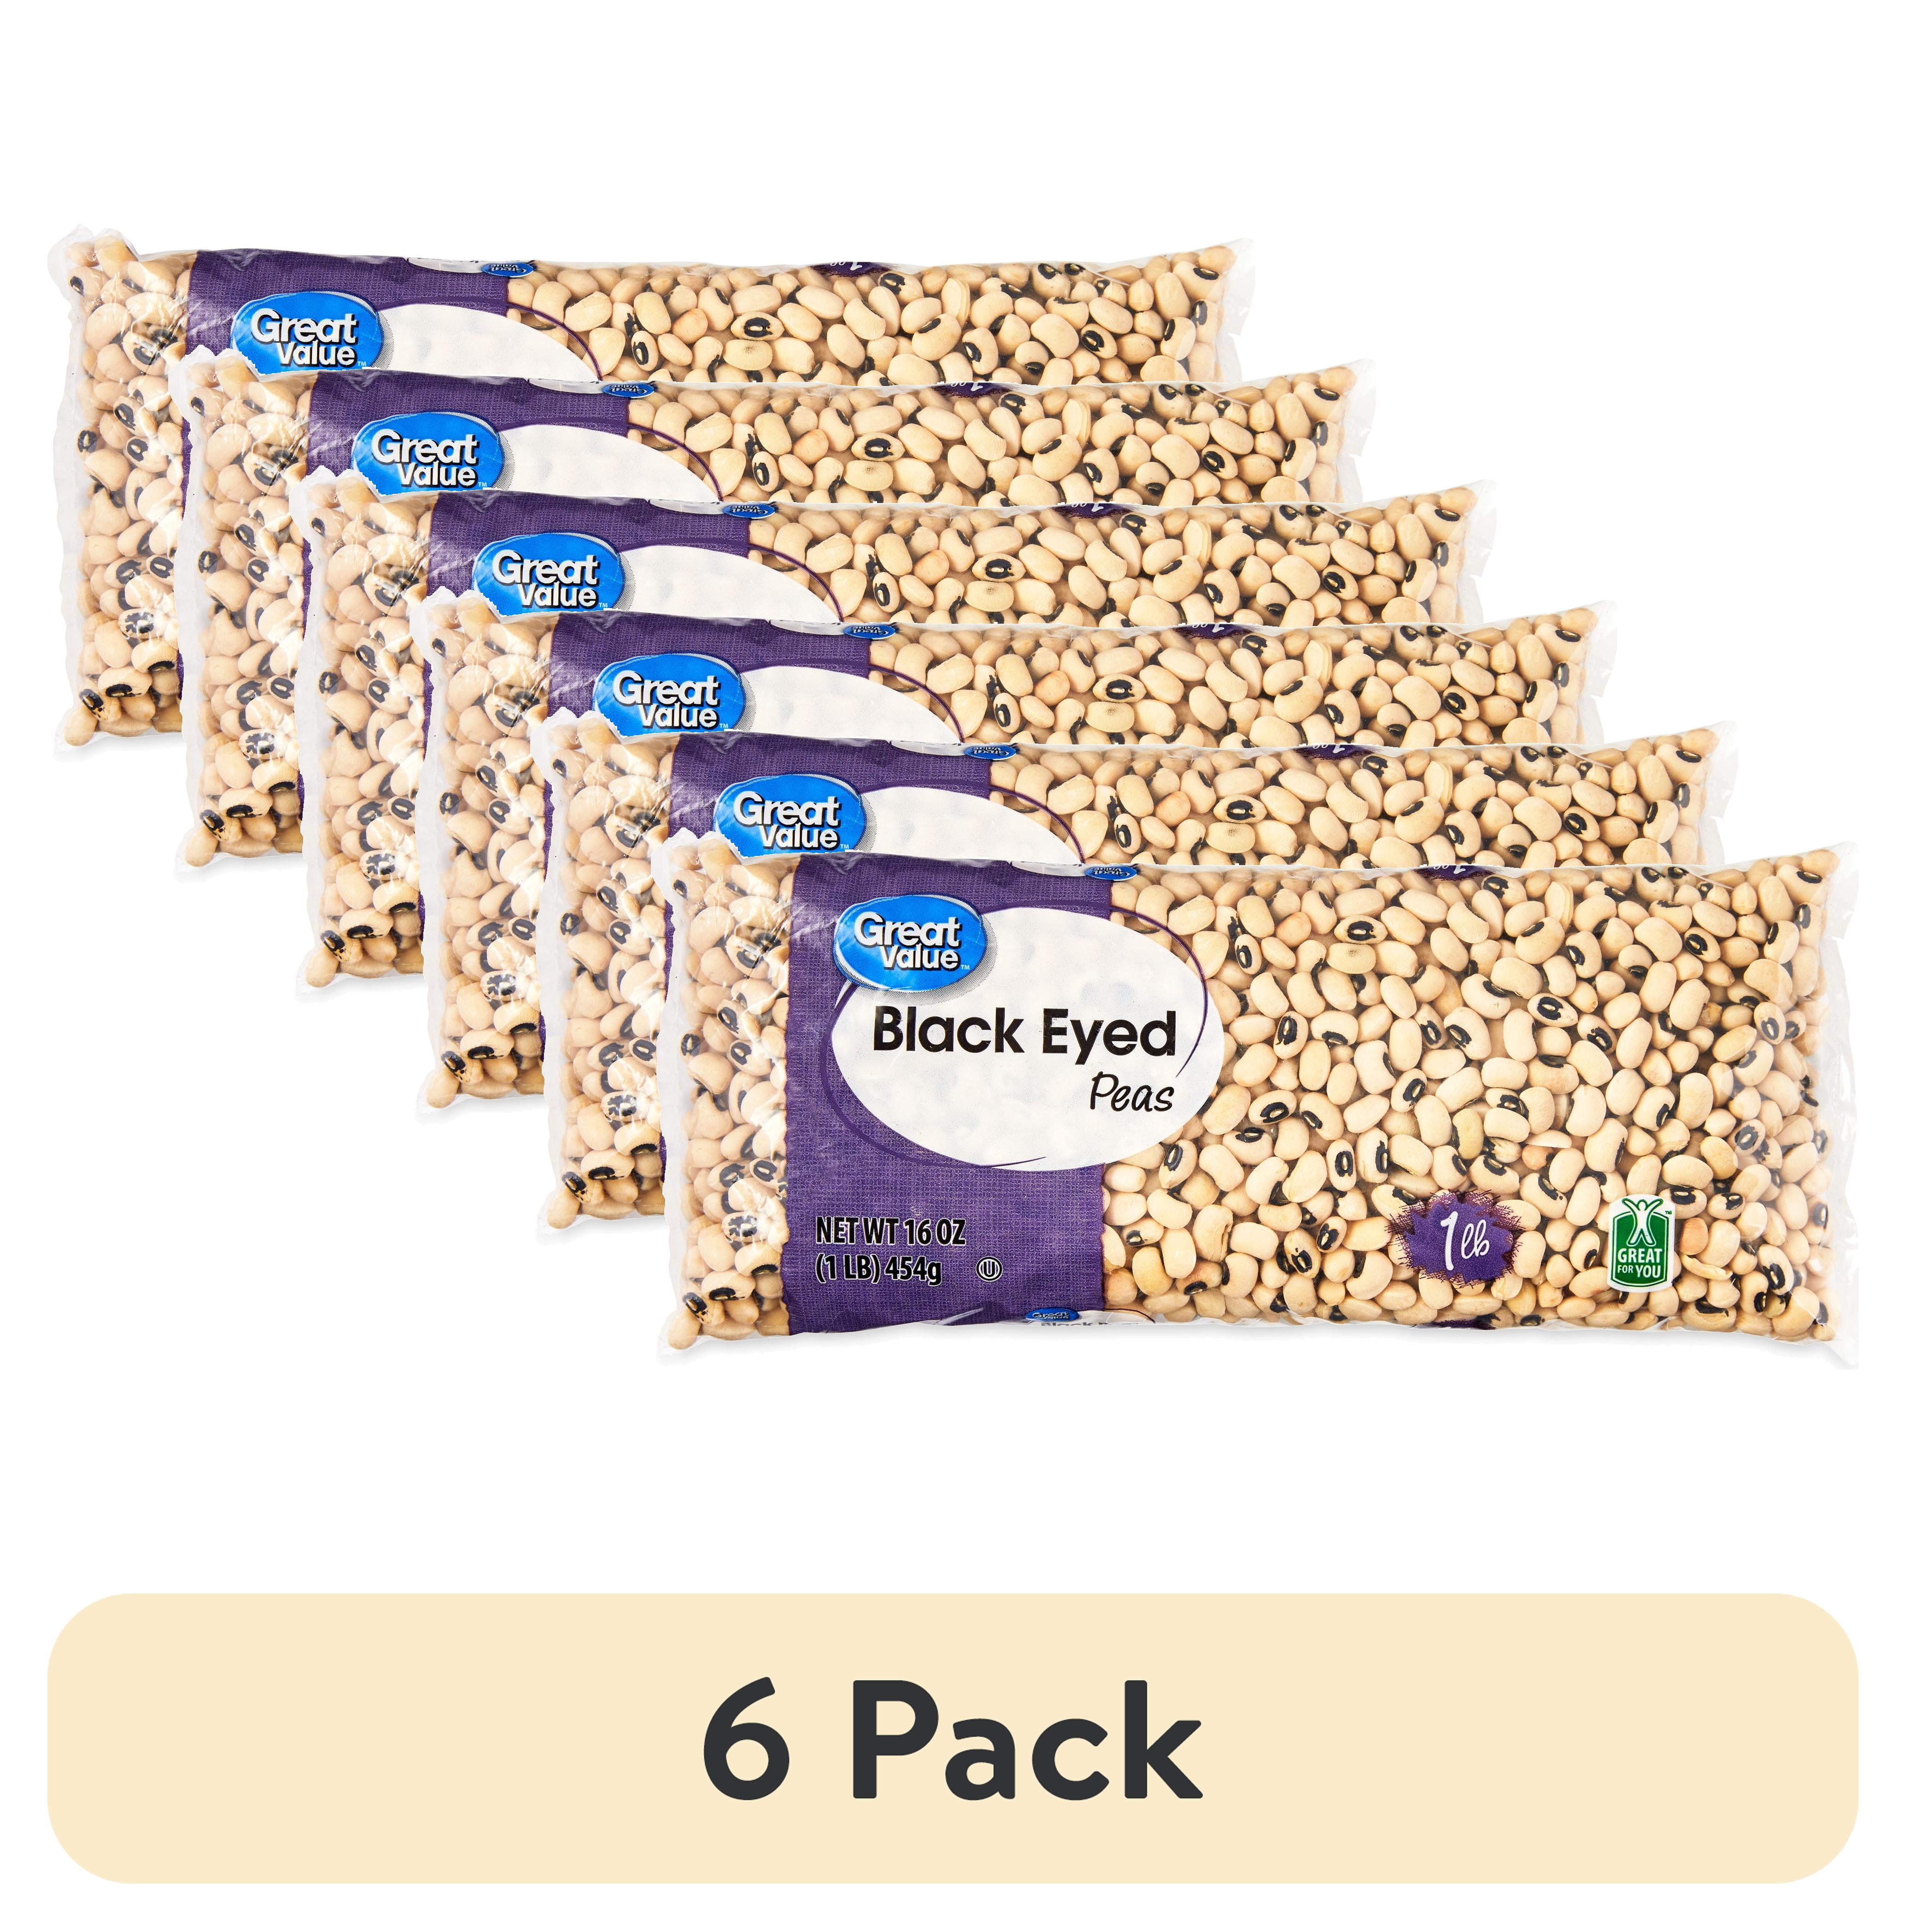 10 pack) Great Value Black Eyed Peas, 1 lb - Walmart.com